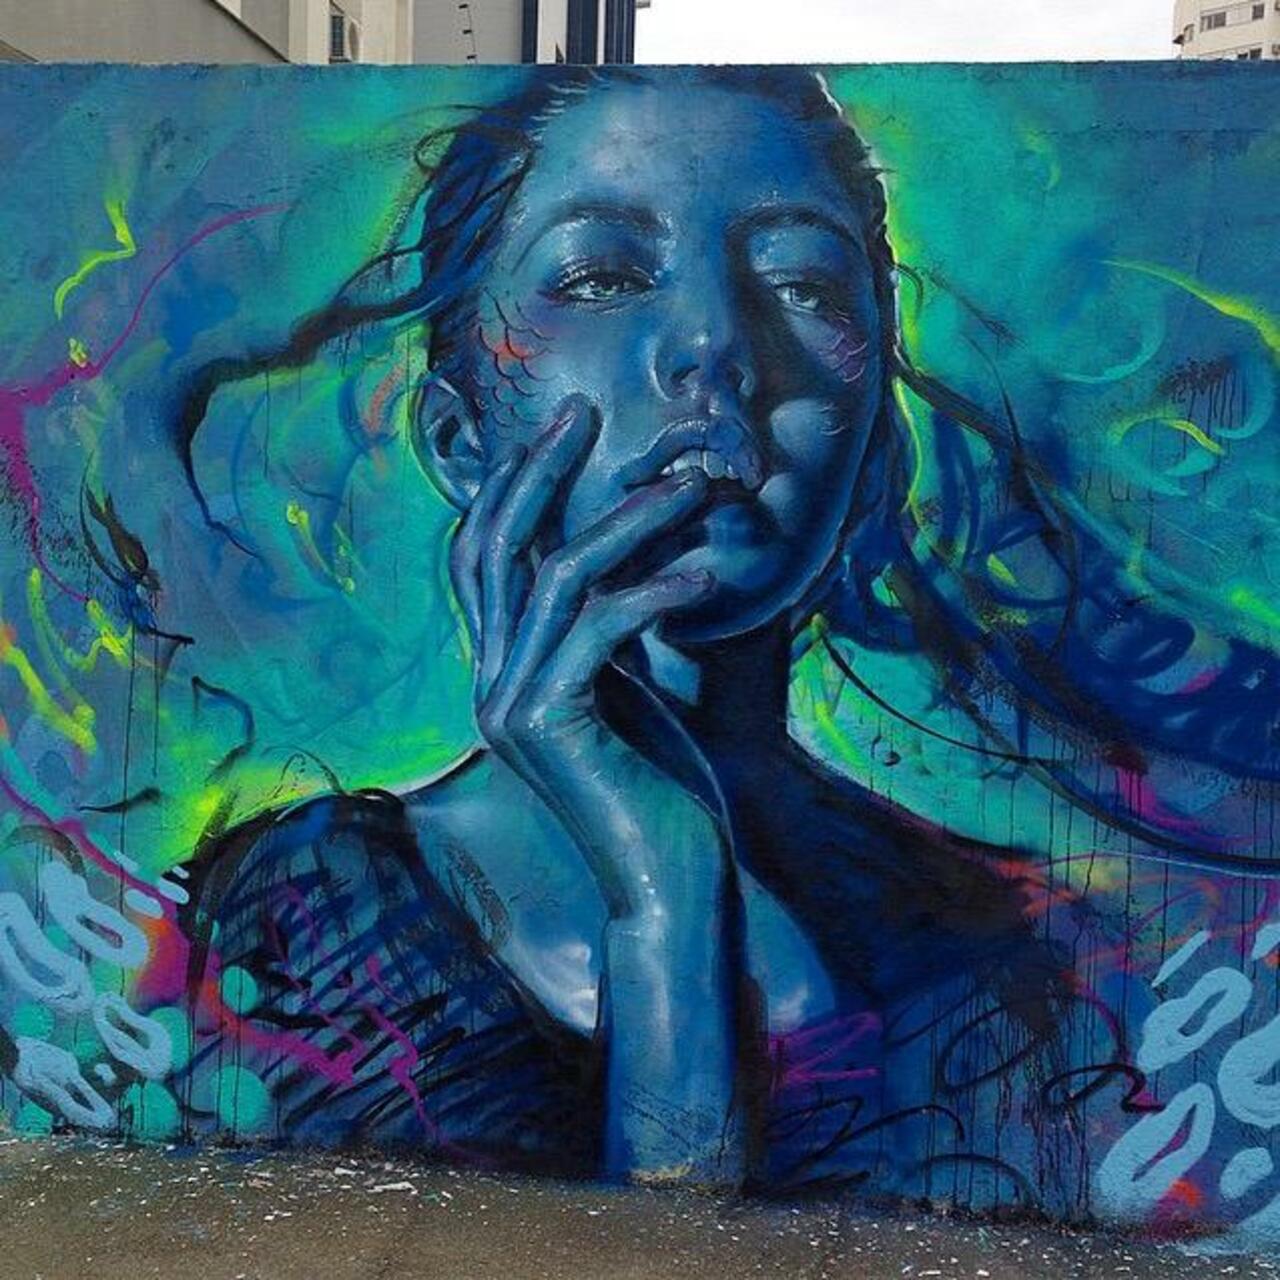 Thiago Valdi new Street Art piece titled 'Day Dreamer' #art #mural #graffiti #streetart http://t.co/3UodbQm48I …… http://twitter.com/GoogleStreetArt/status/652604458048876544/photo/1/large?utm_source=fb&utm_medium=fb&utm_campaign=charlesjackso14&utm_content=652724461288988672